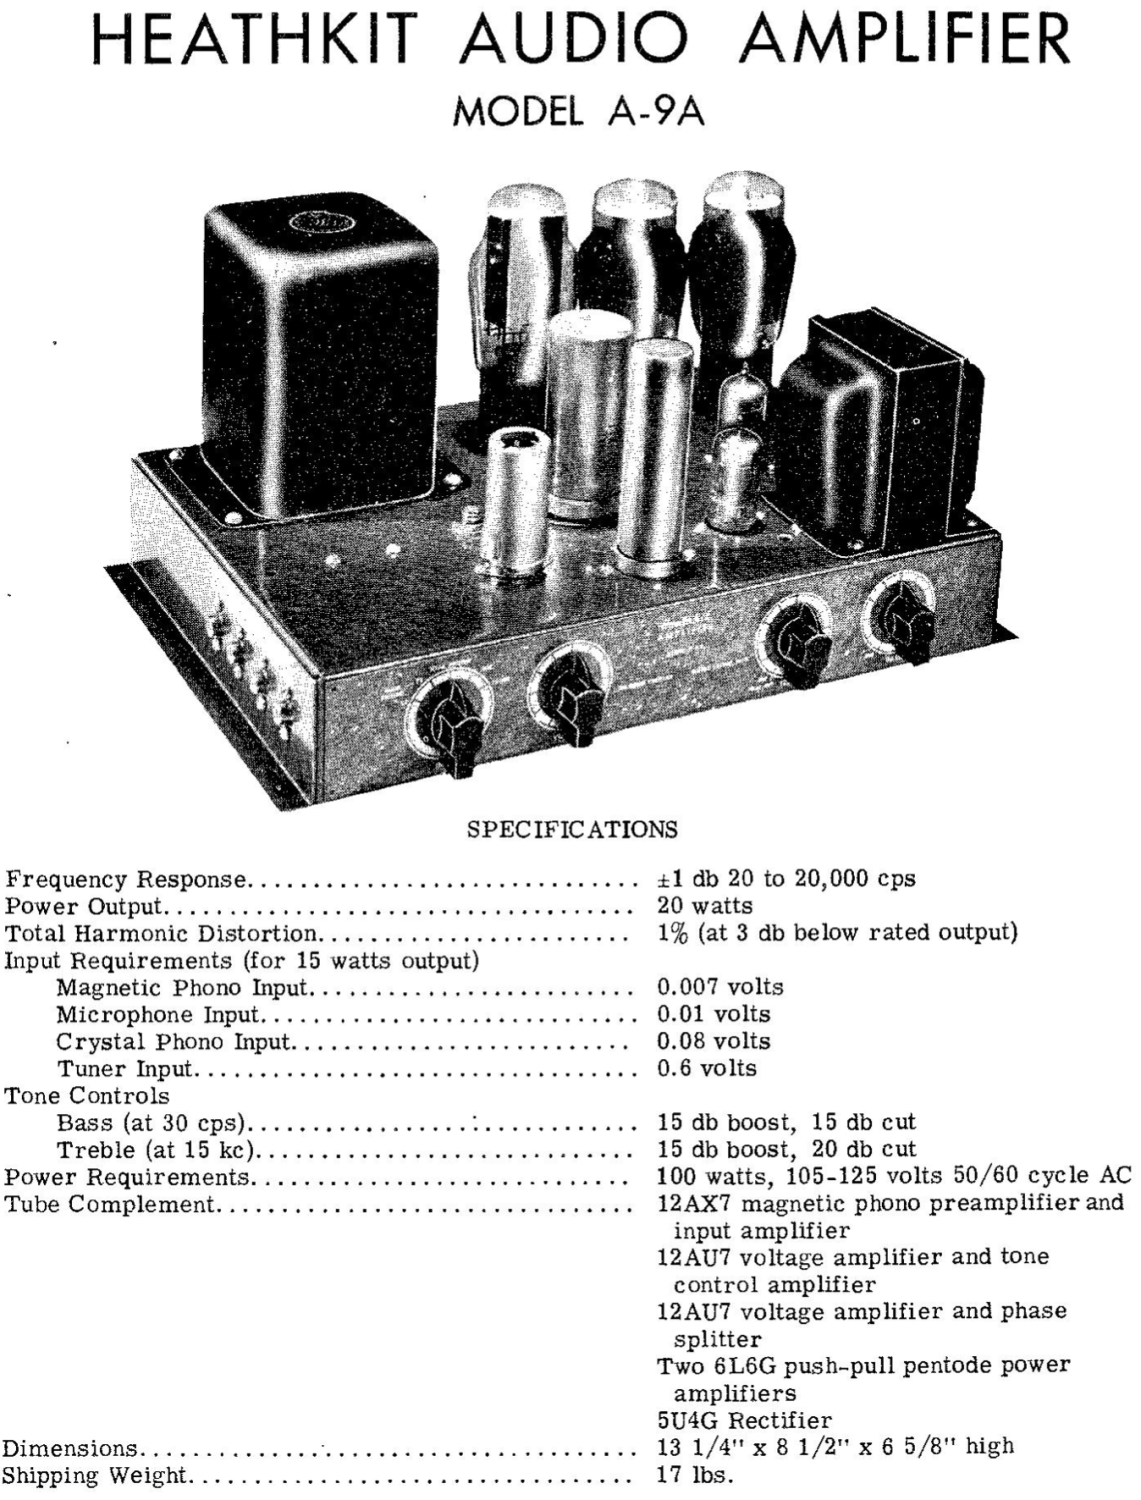 Heathkit A-9A Audio Amplifier - Schematic